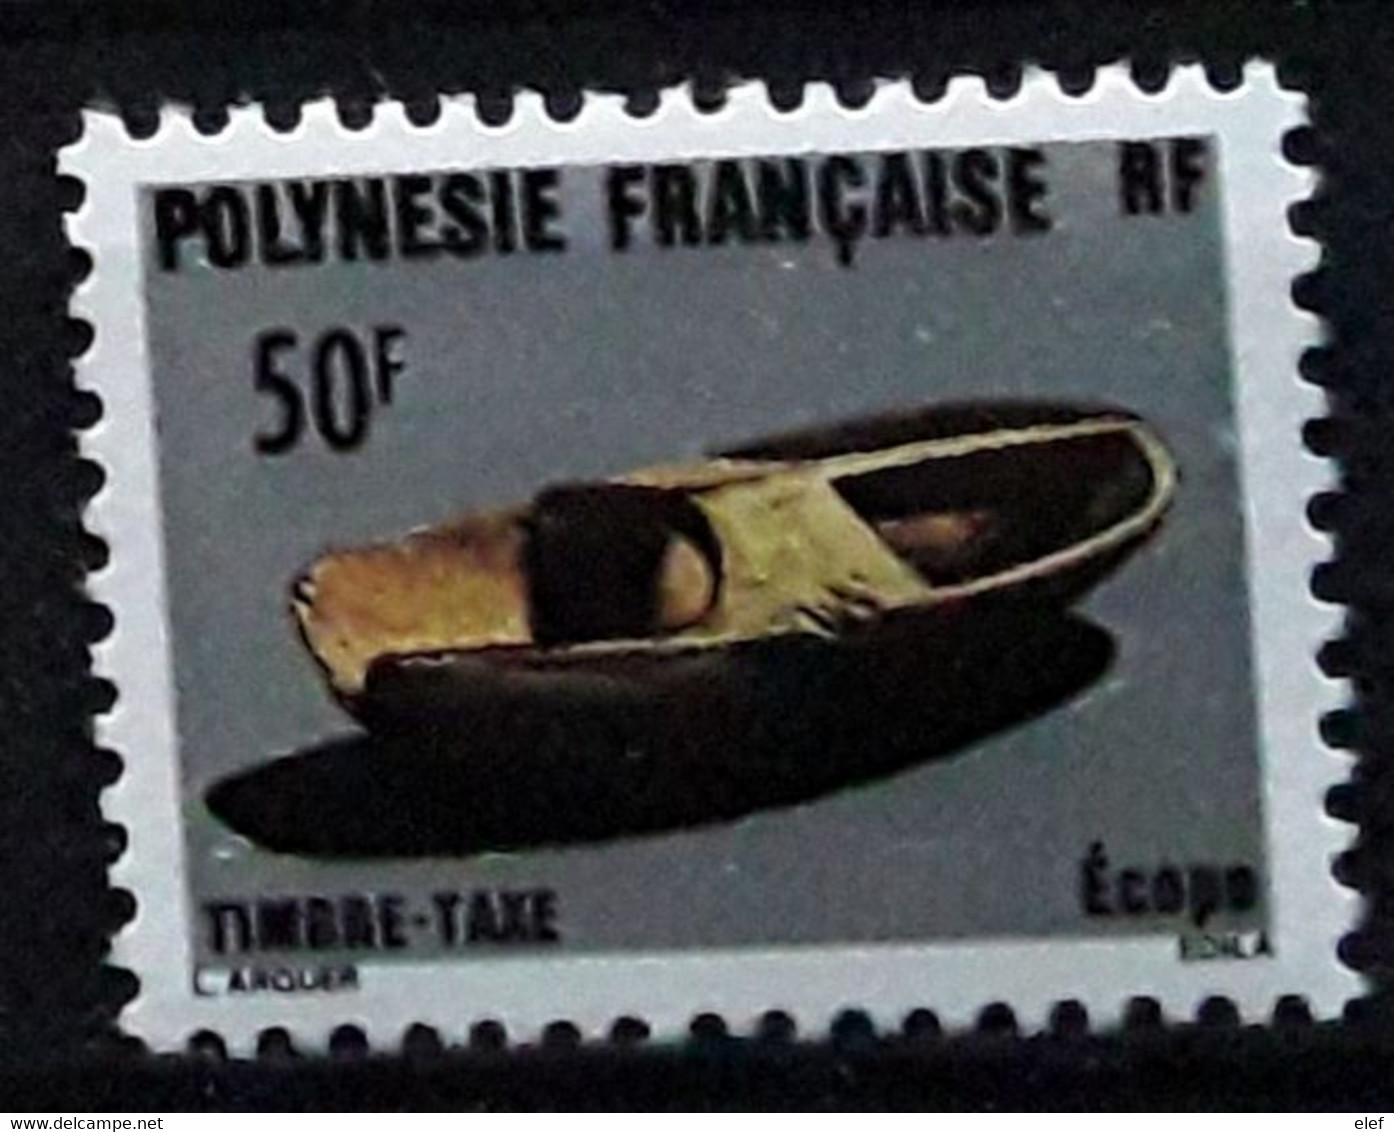 POLYNESIE FRANÇAISE TAXE Postage Due  1987  Yvert No 9 , 50 F , ECOPE  , Neuf ** MNH  TB - Timbres-taxe